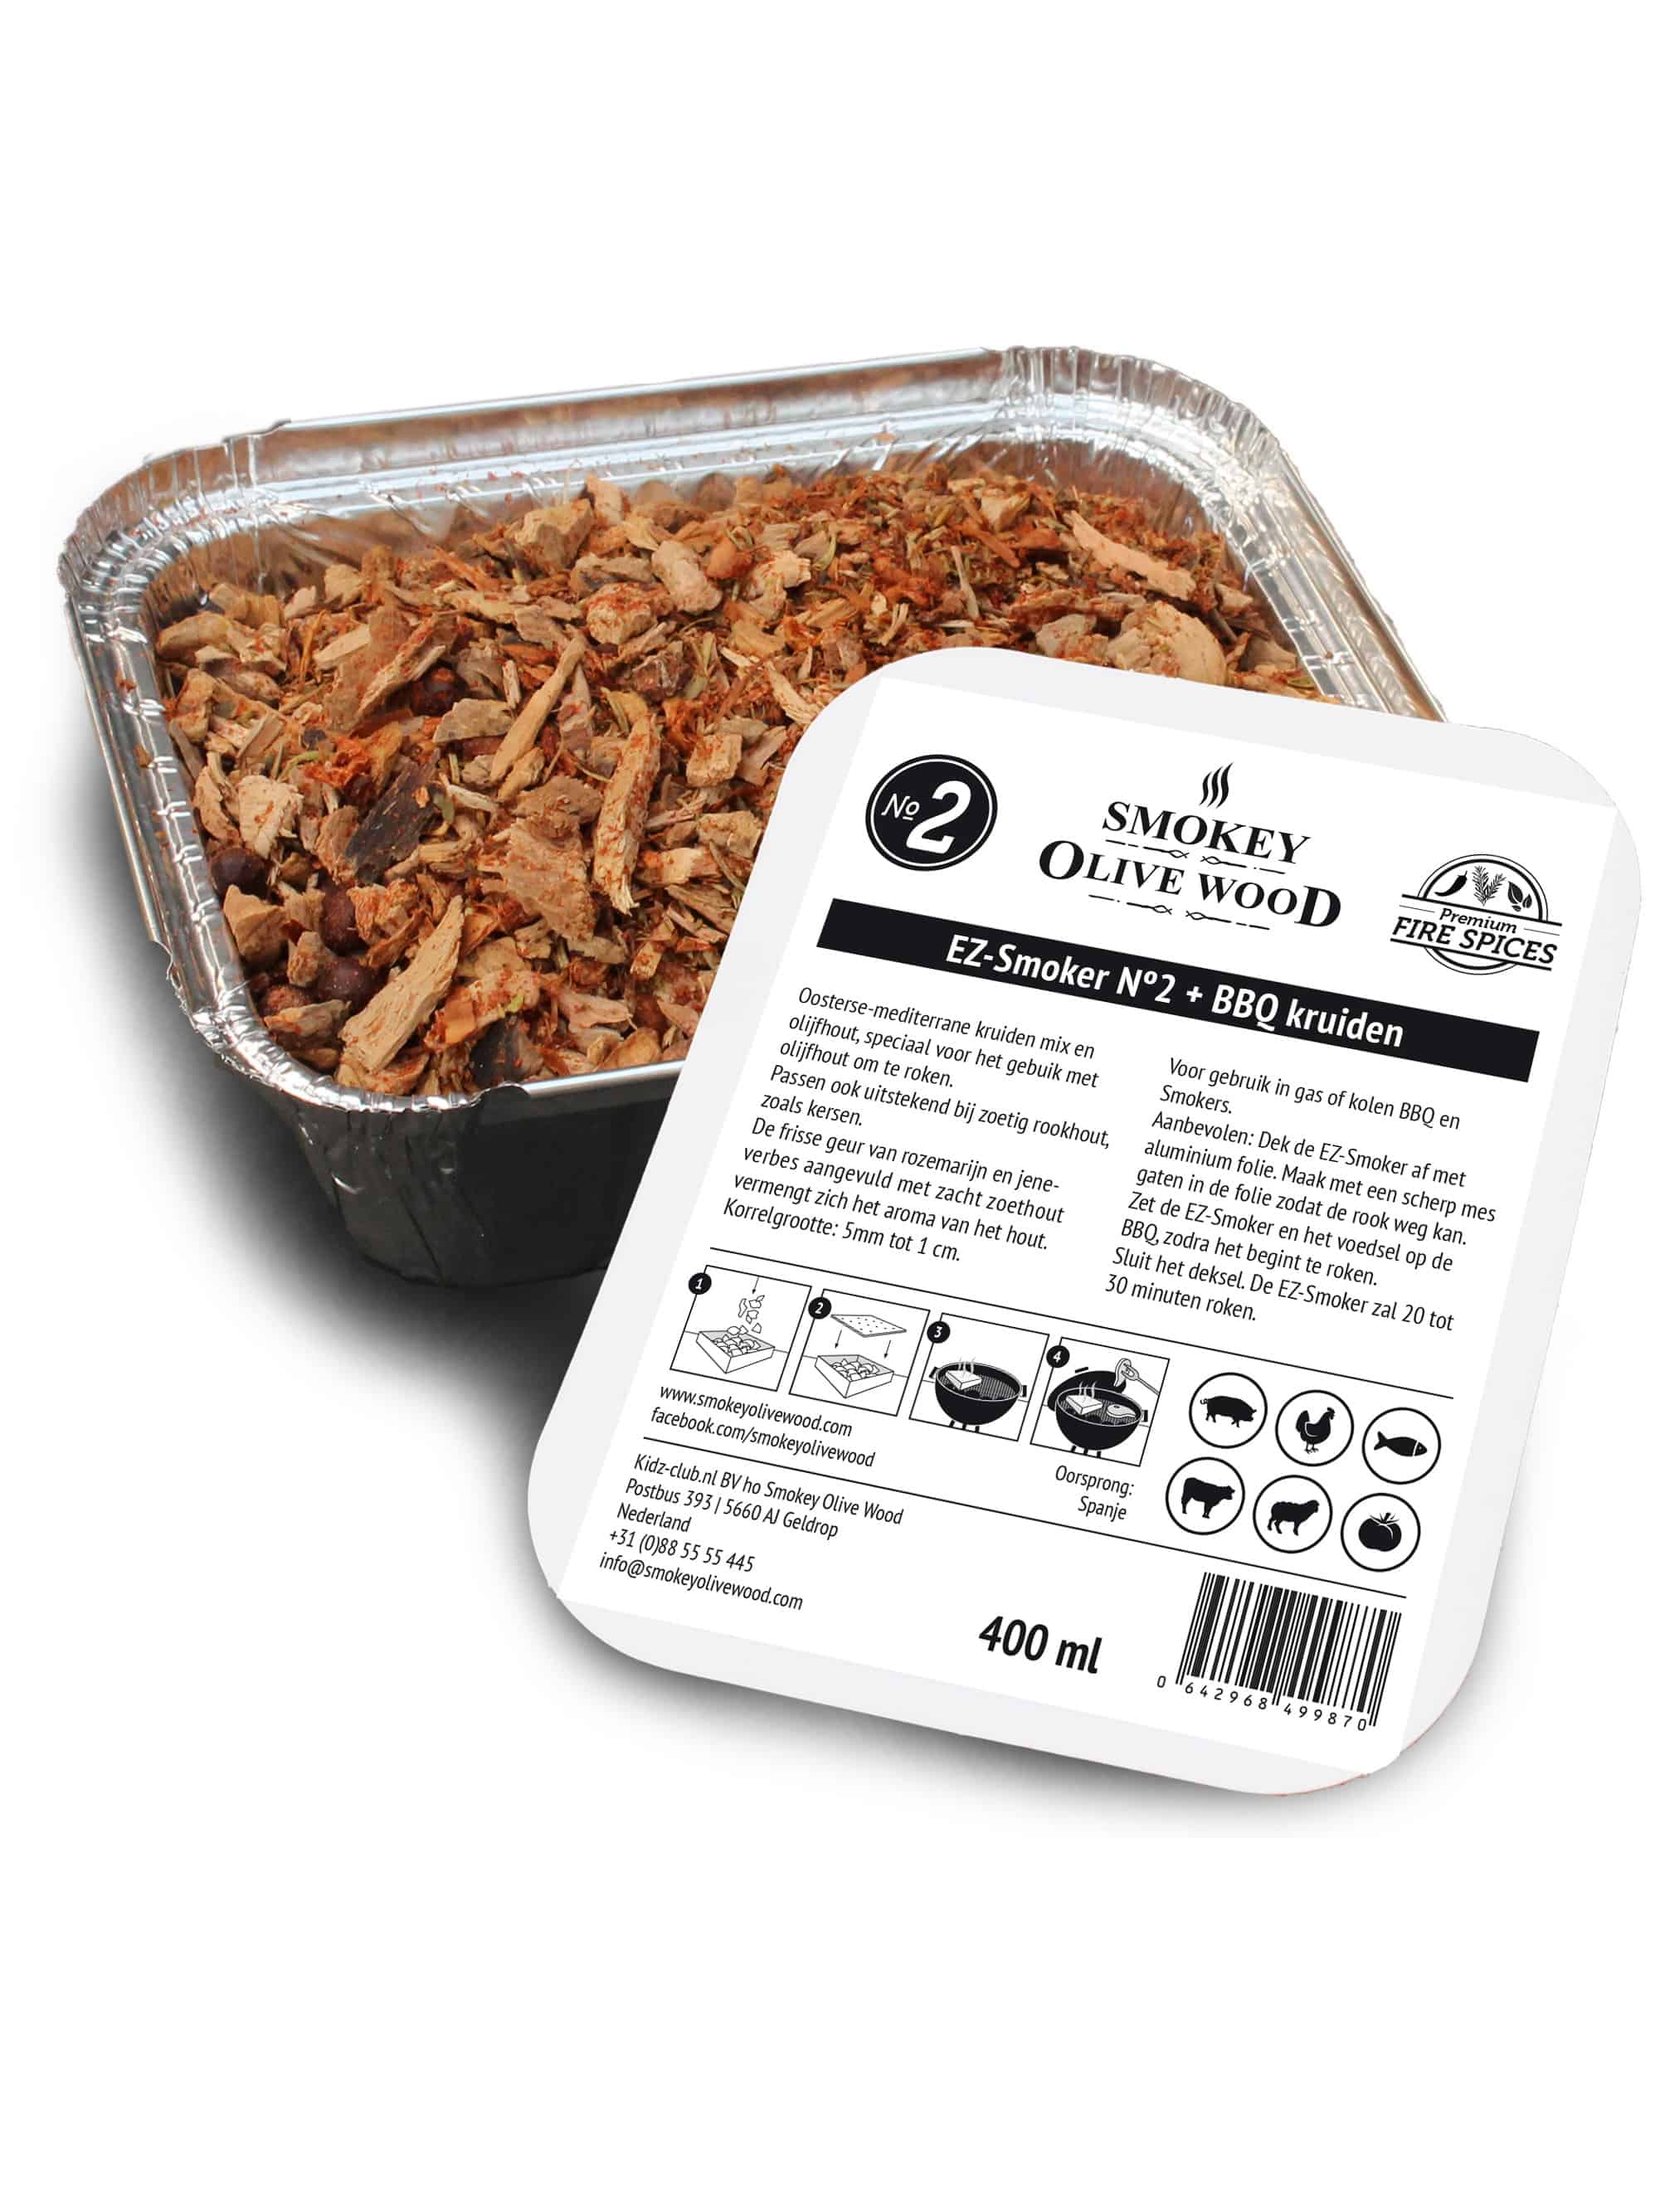 Smokey Olive Wood EZ-Smoker Nº2 + vuurkruiden Smoker BBQ Chips Grill rooken